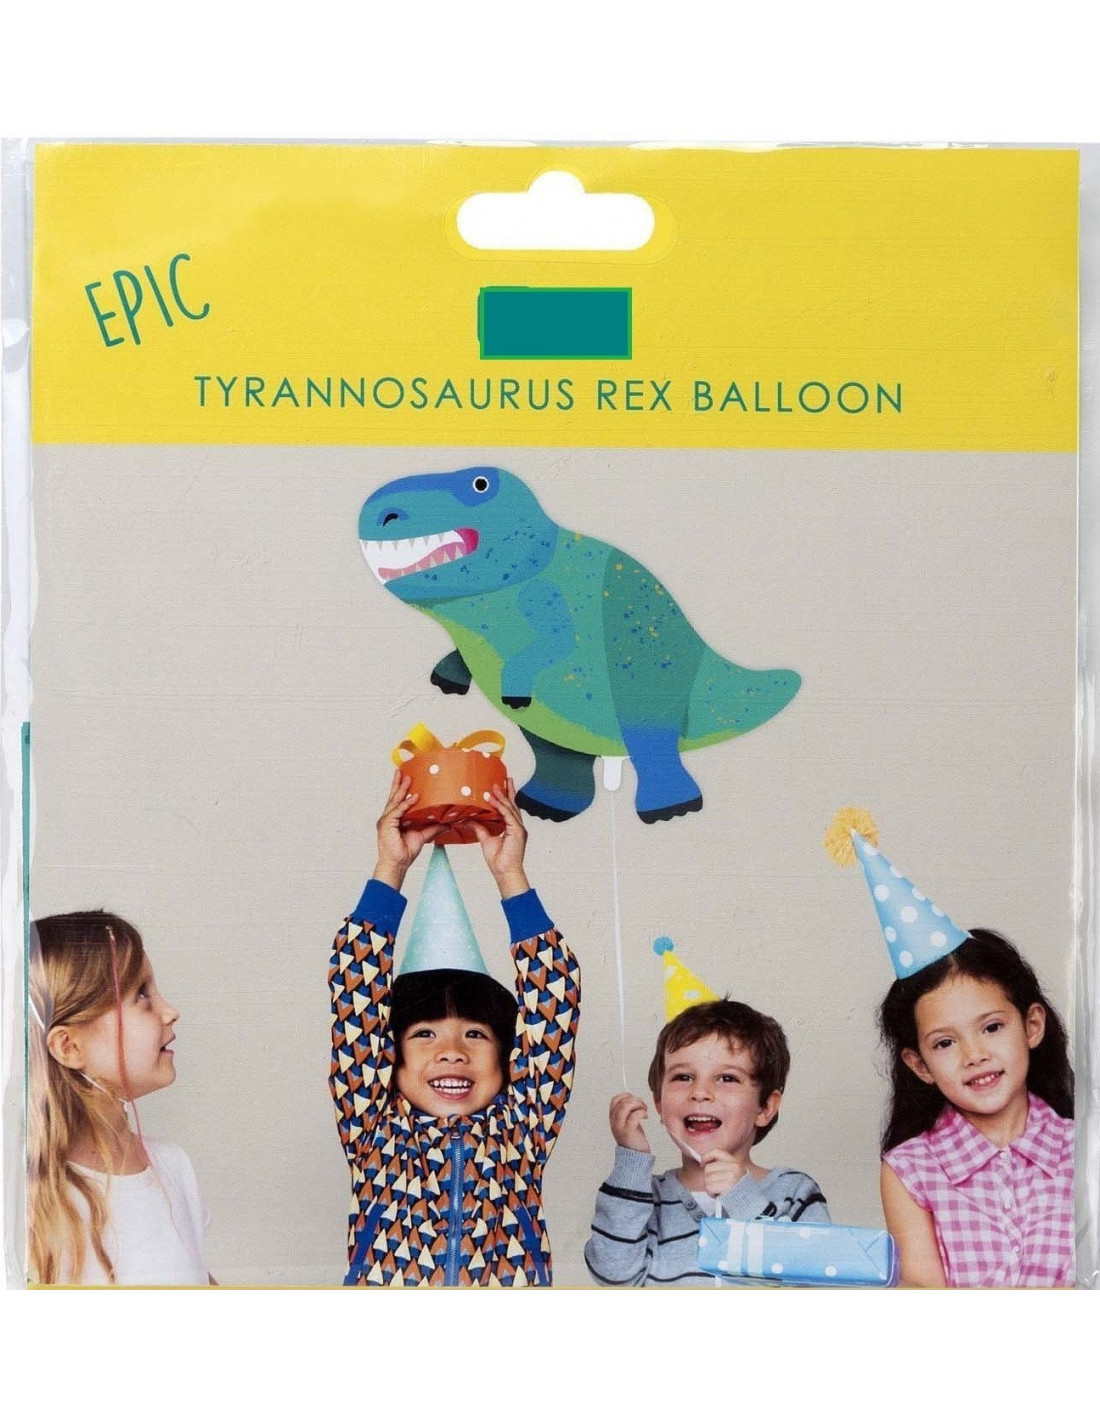 Ballons de baudruche dinosaure - Deco anniversaire dinosaure